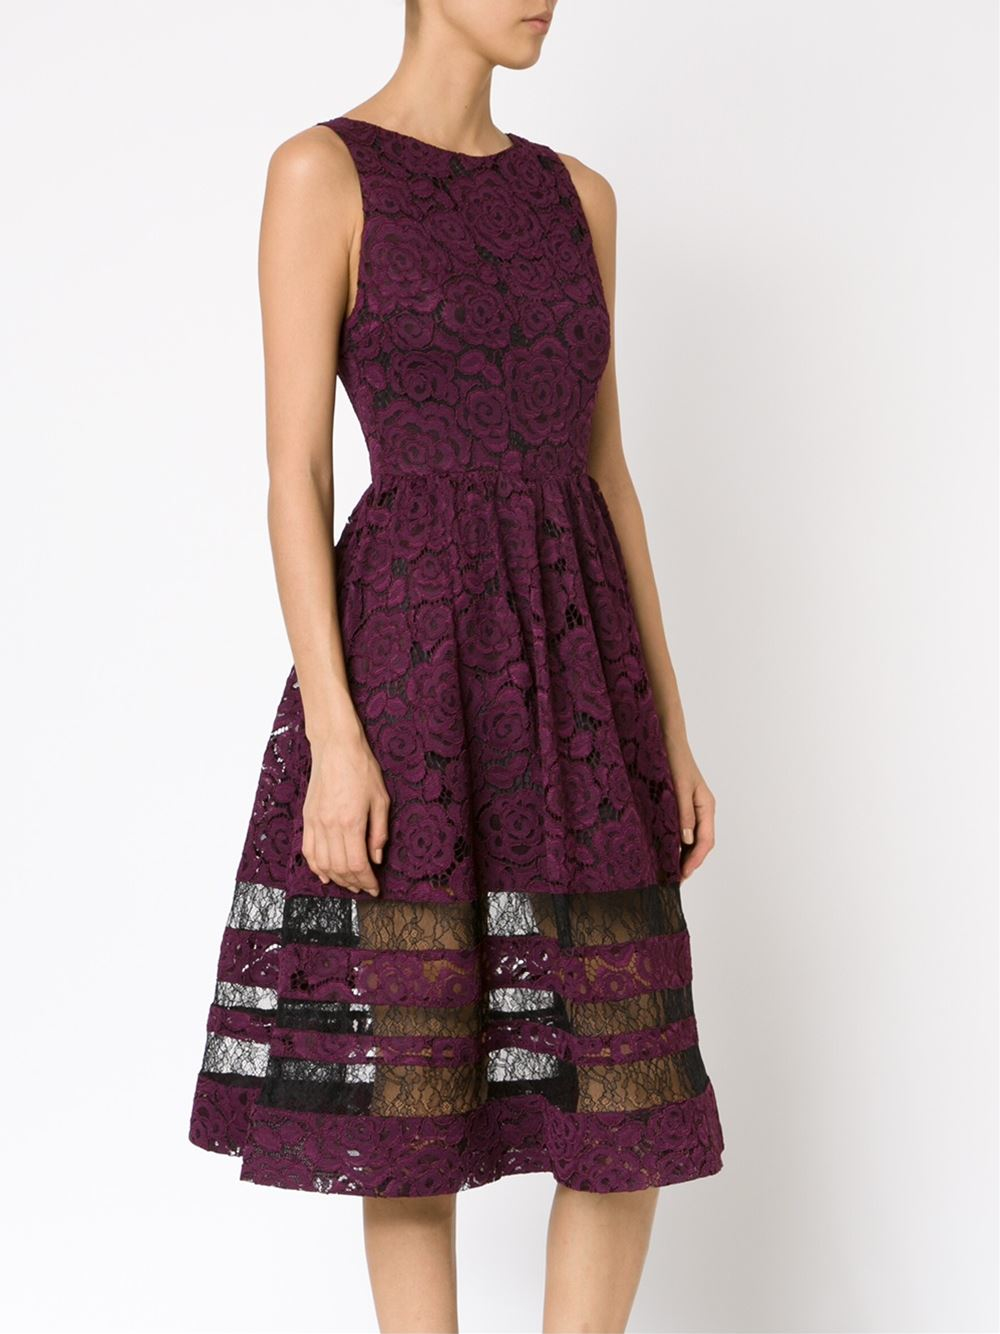 Alice + olivia Flared Lace Dress in Purple -   Alice and Olivia lace dress